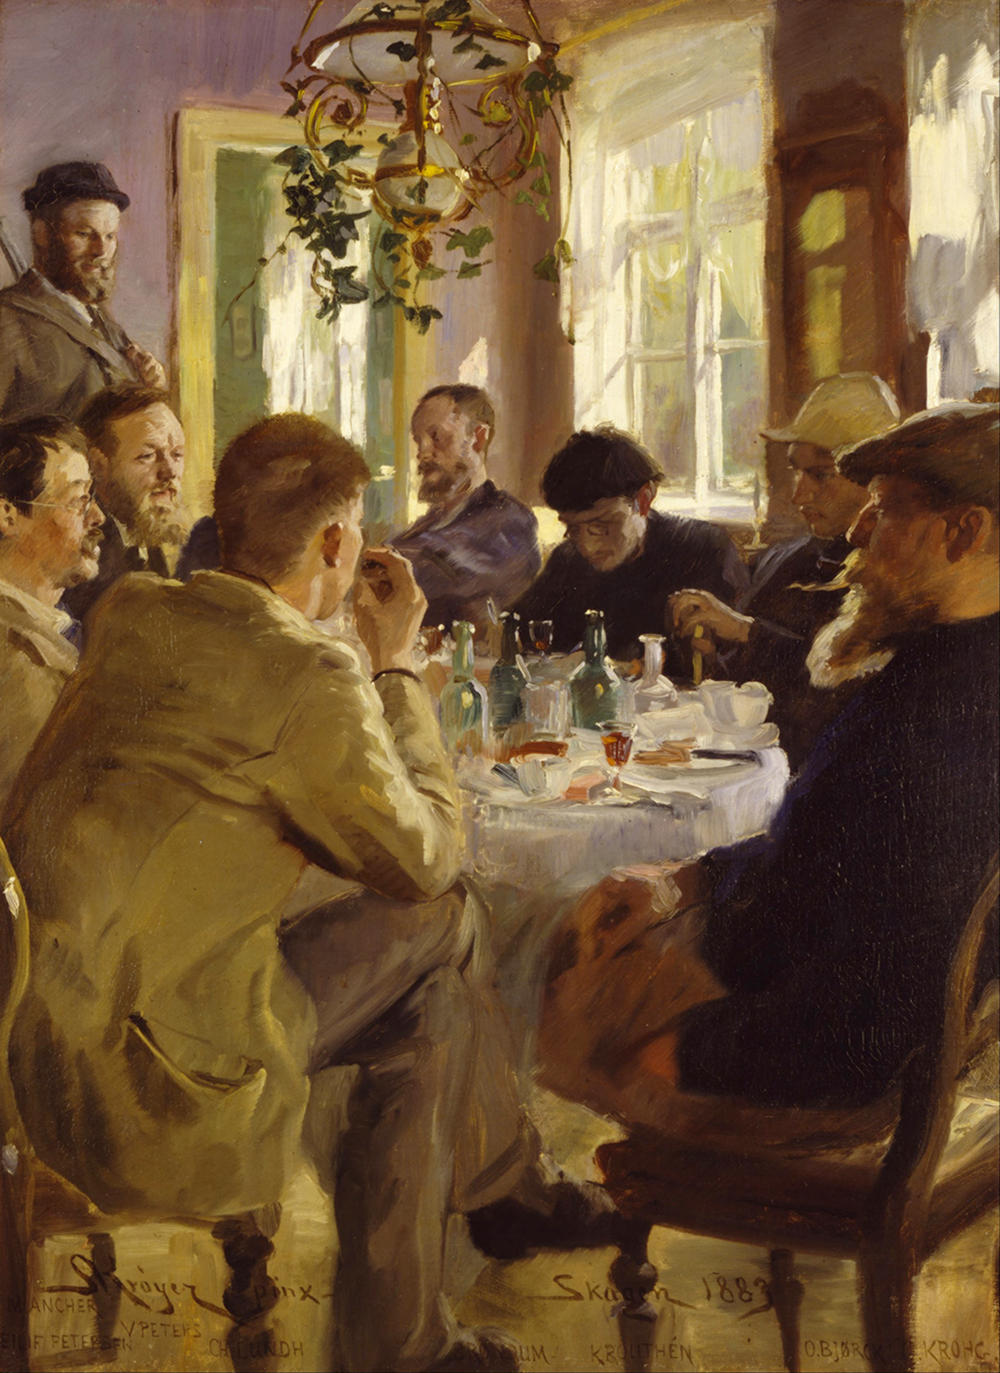 At Lunch by Peder Severin Krøyer, 1883